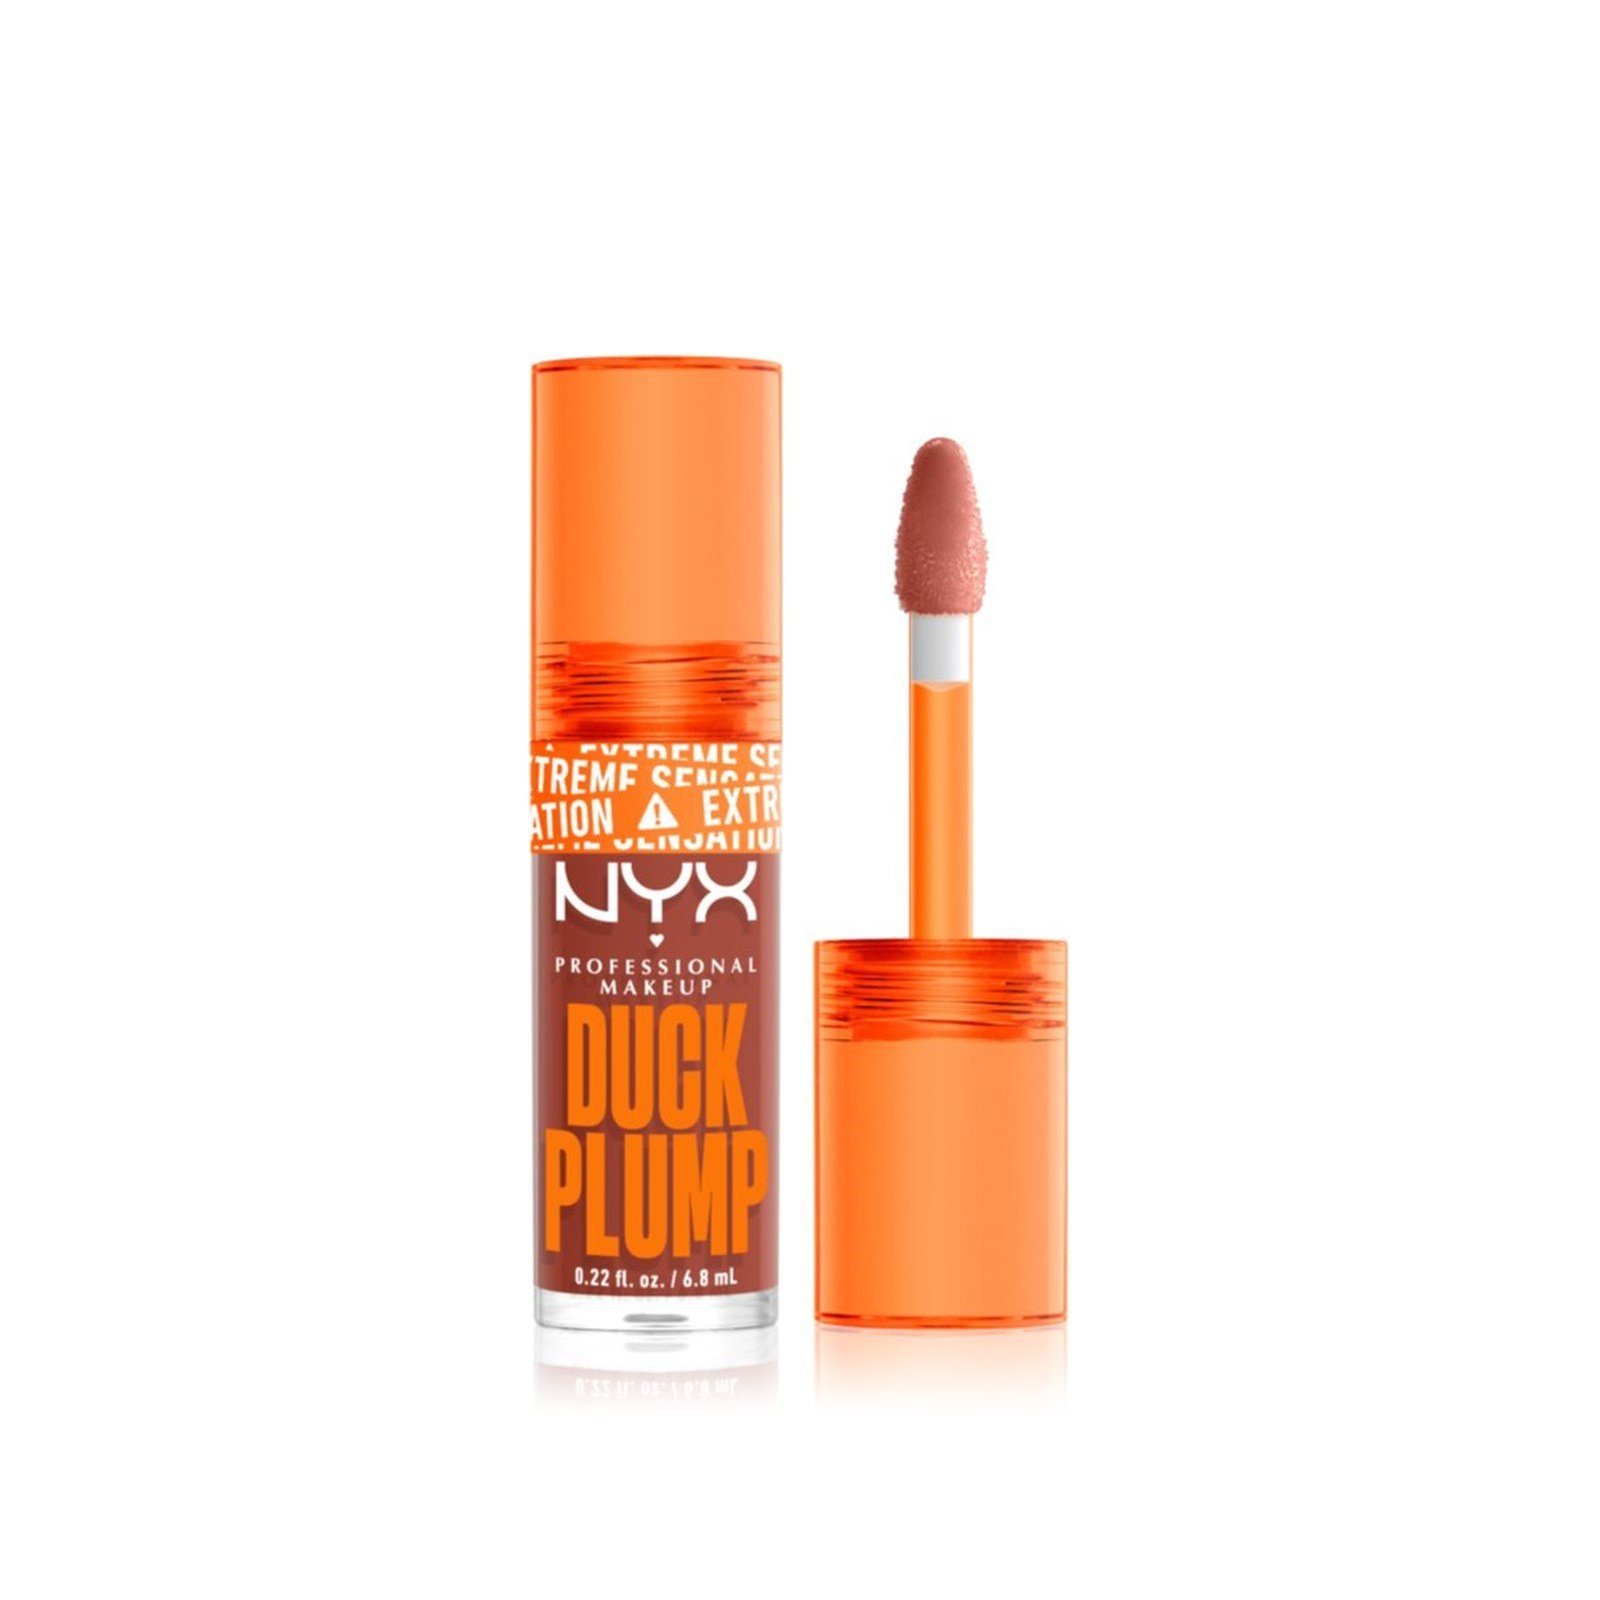 NYX Pro Makeup Duck Plump High Pigment Plumping Lip Gloss 05 Brown Of Applause 7ml (0.23floz)